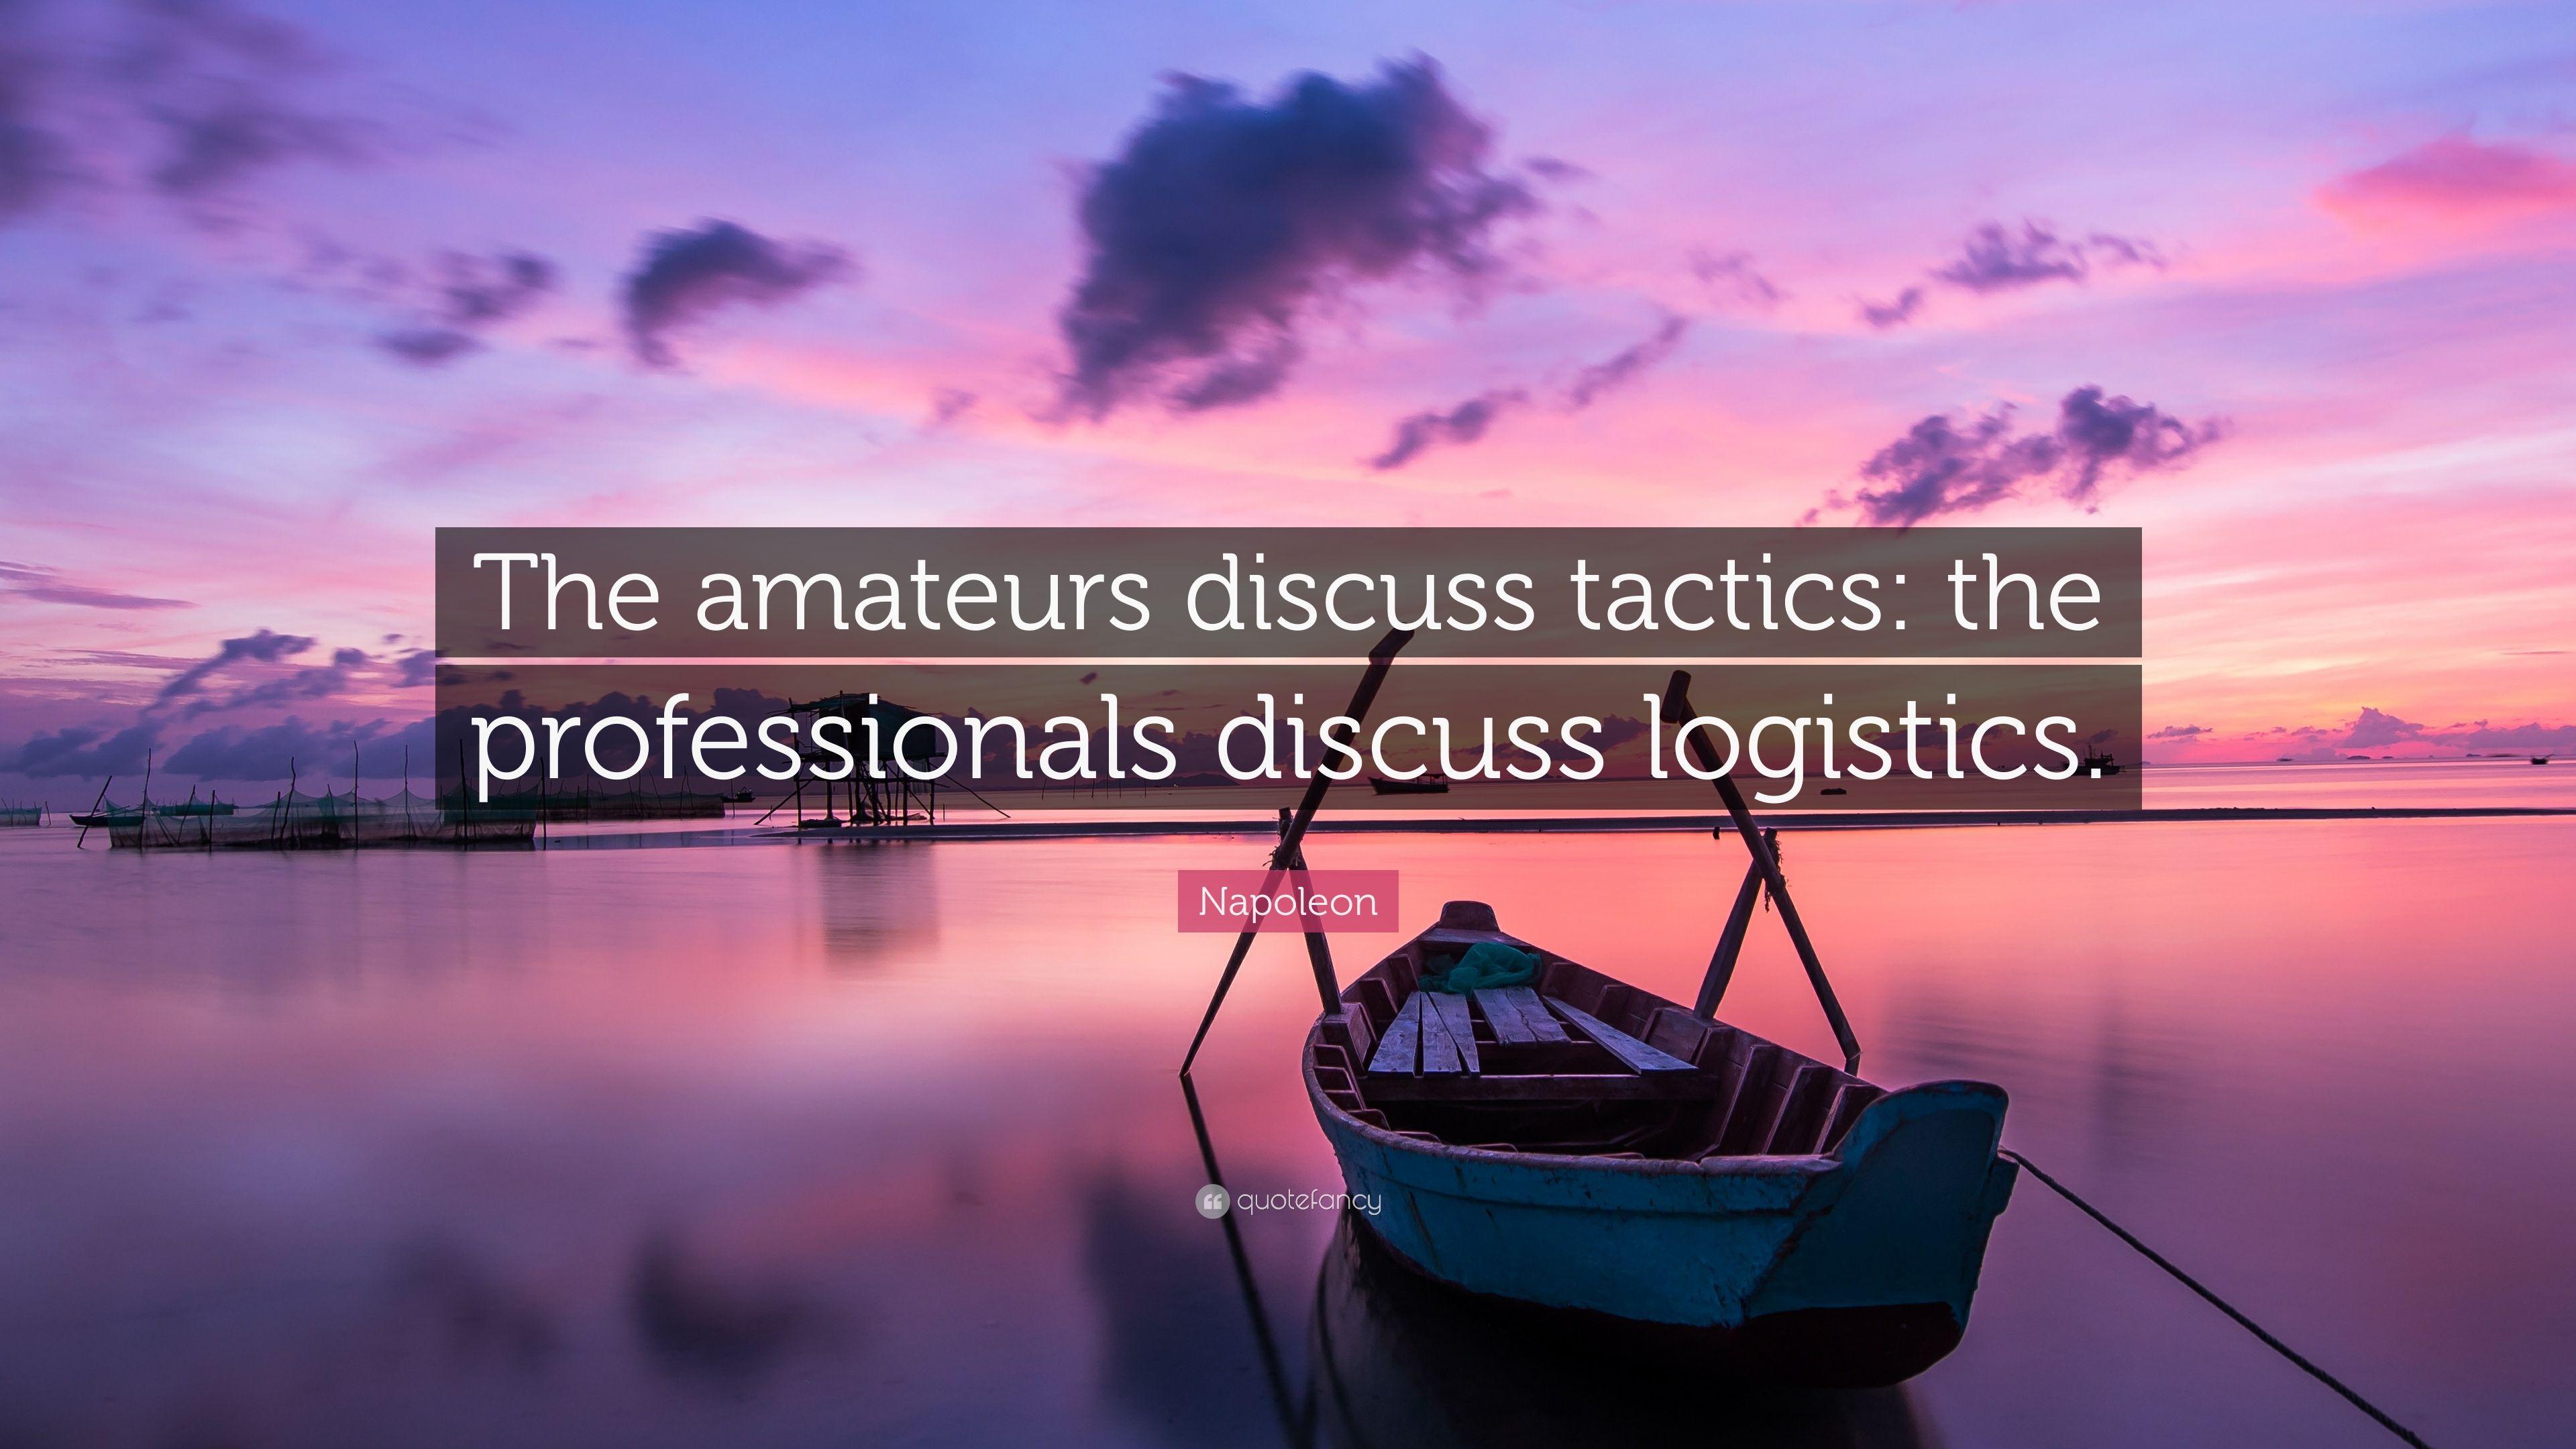 Napoleon Quote: “The amateurs discuss tactics: the professionals